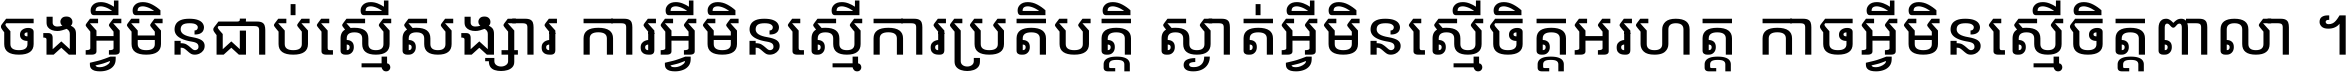 Noto Sans Khmer UI Regular